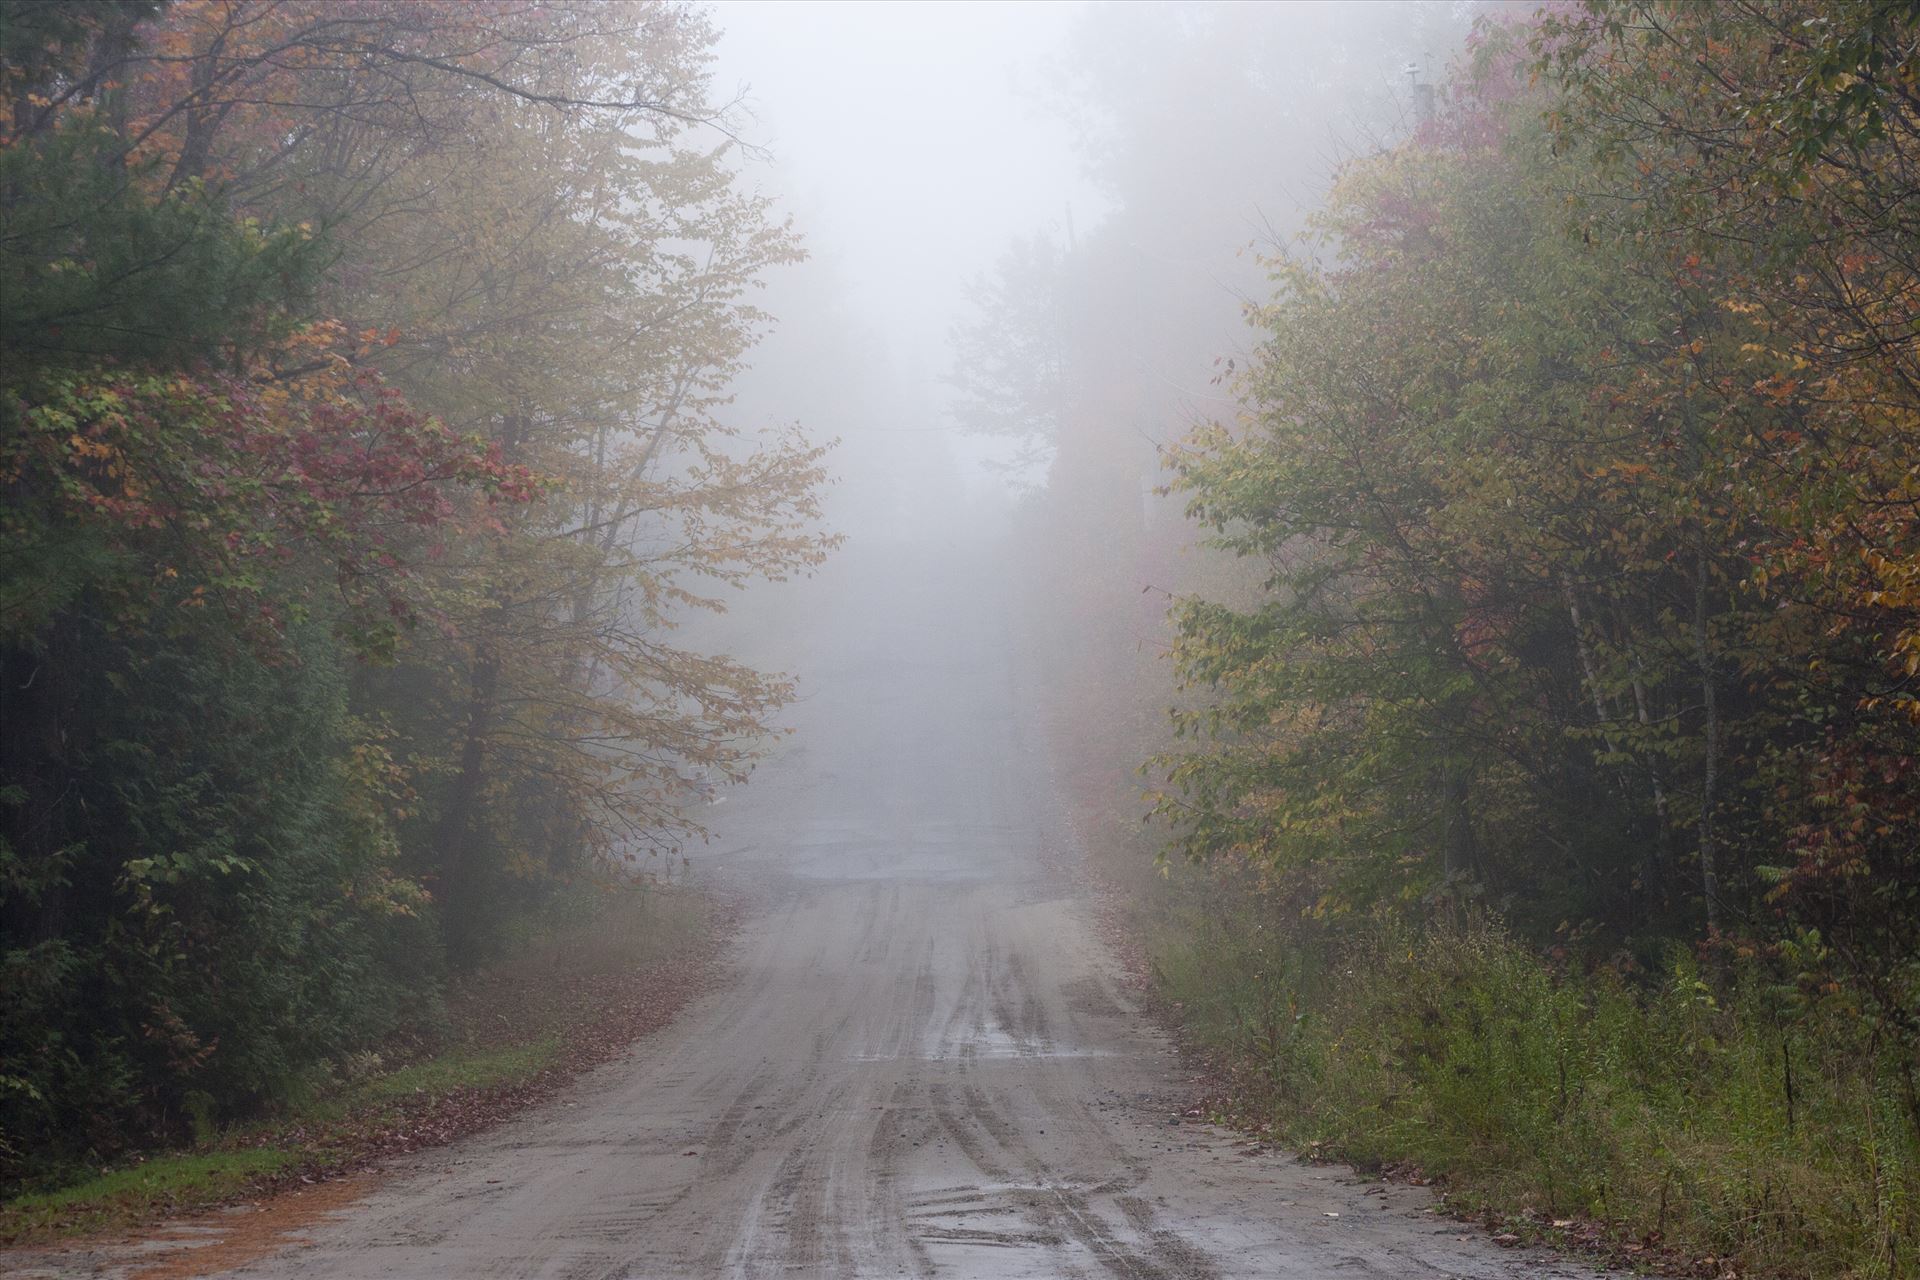 A foggy roadA foggy road with trees on both sides